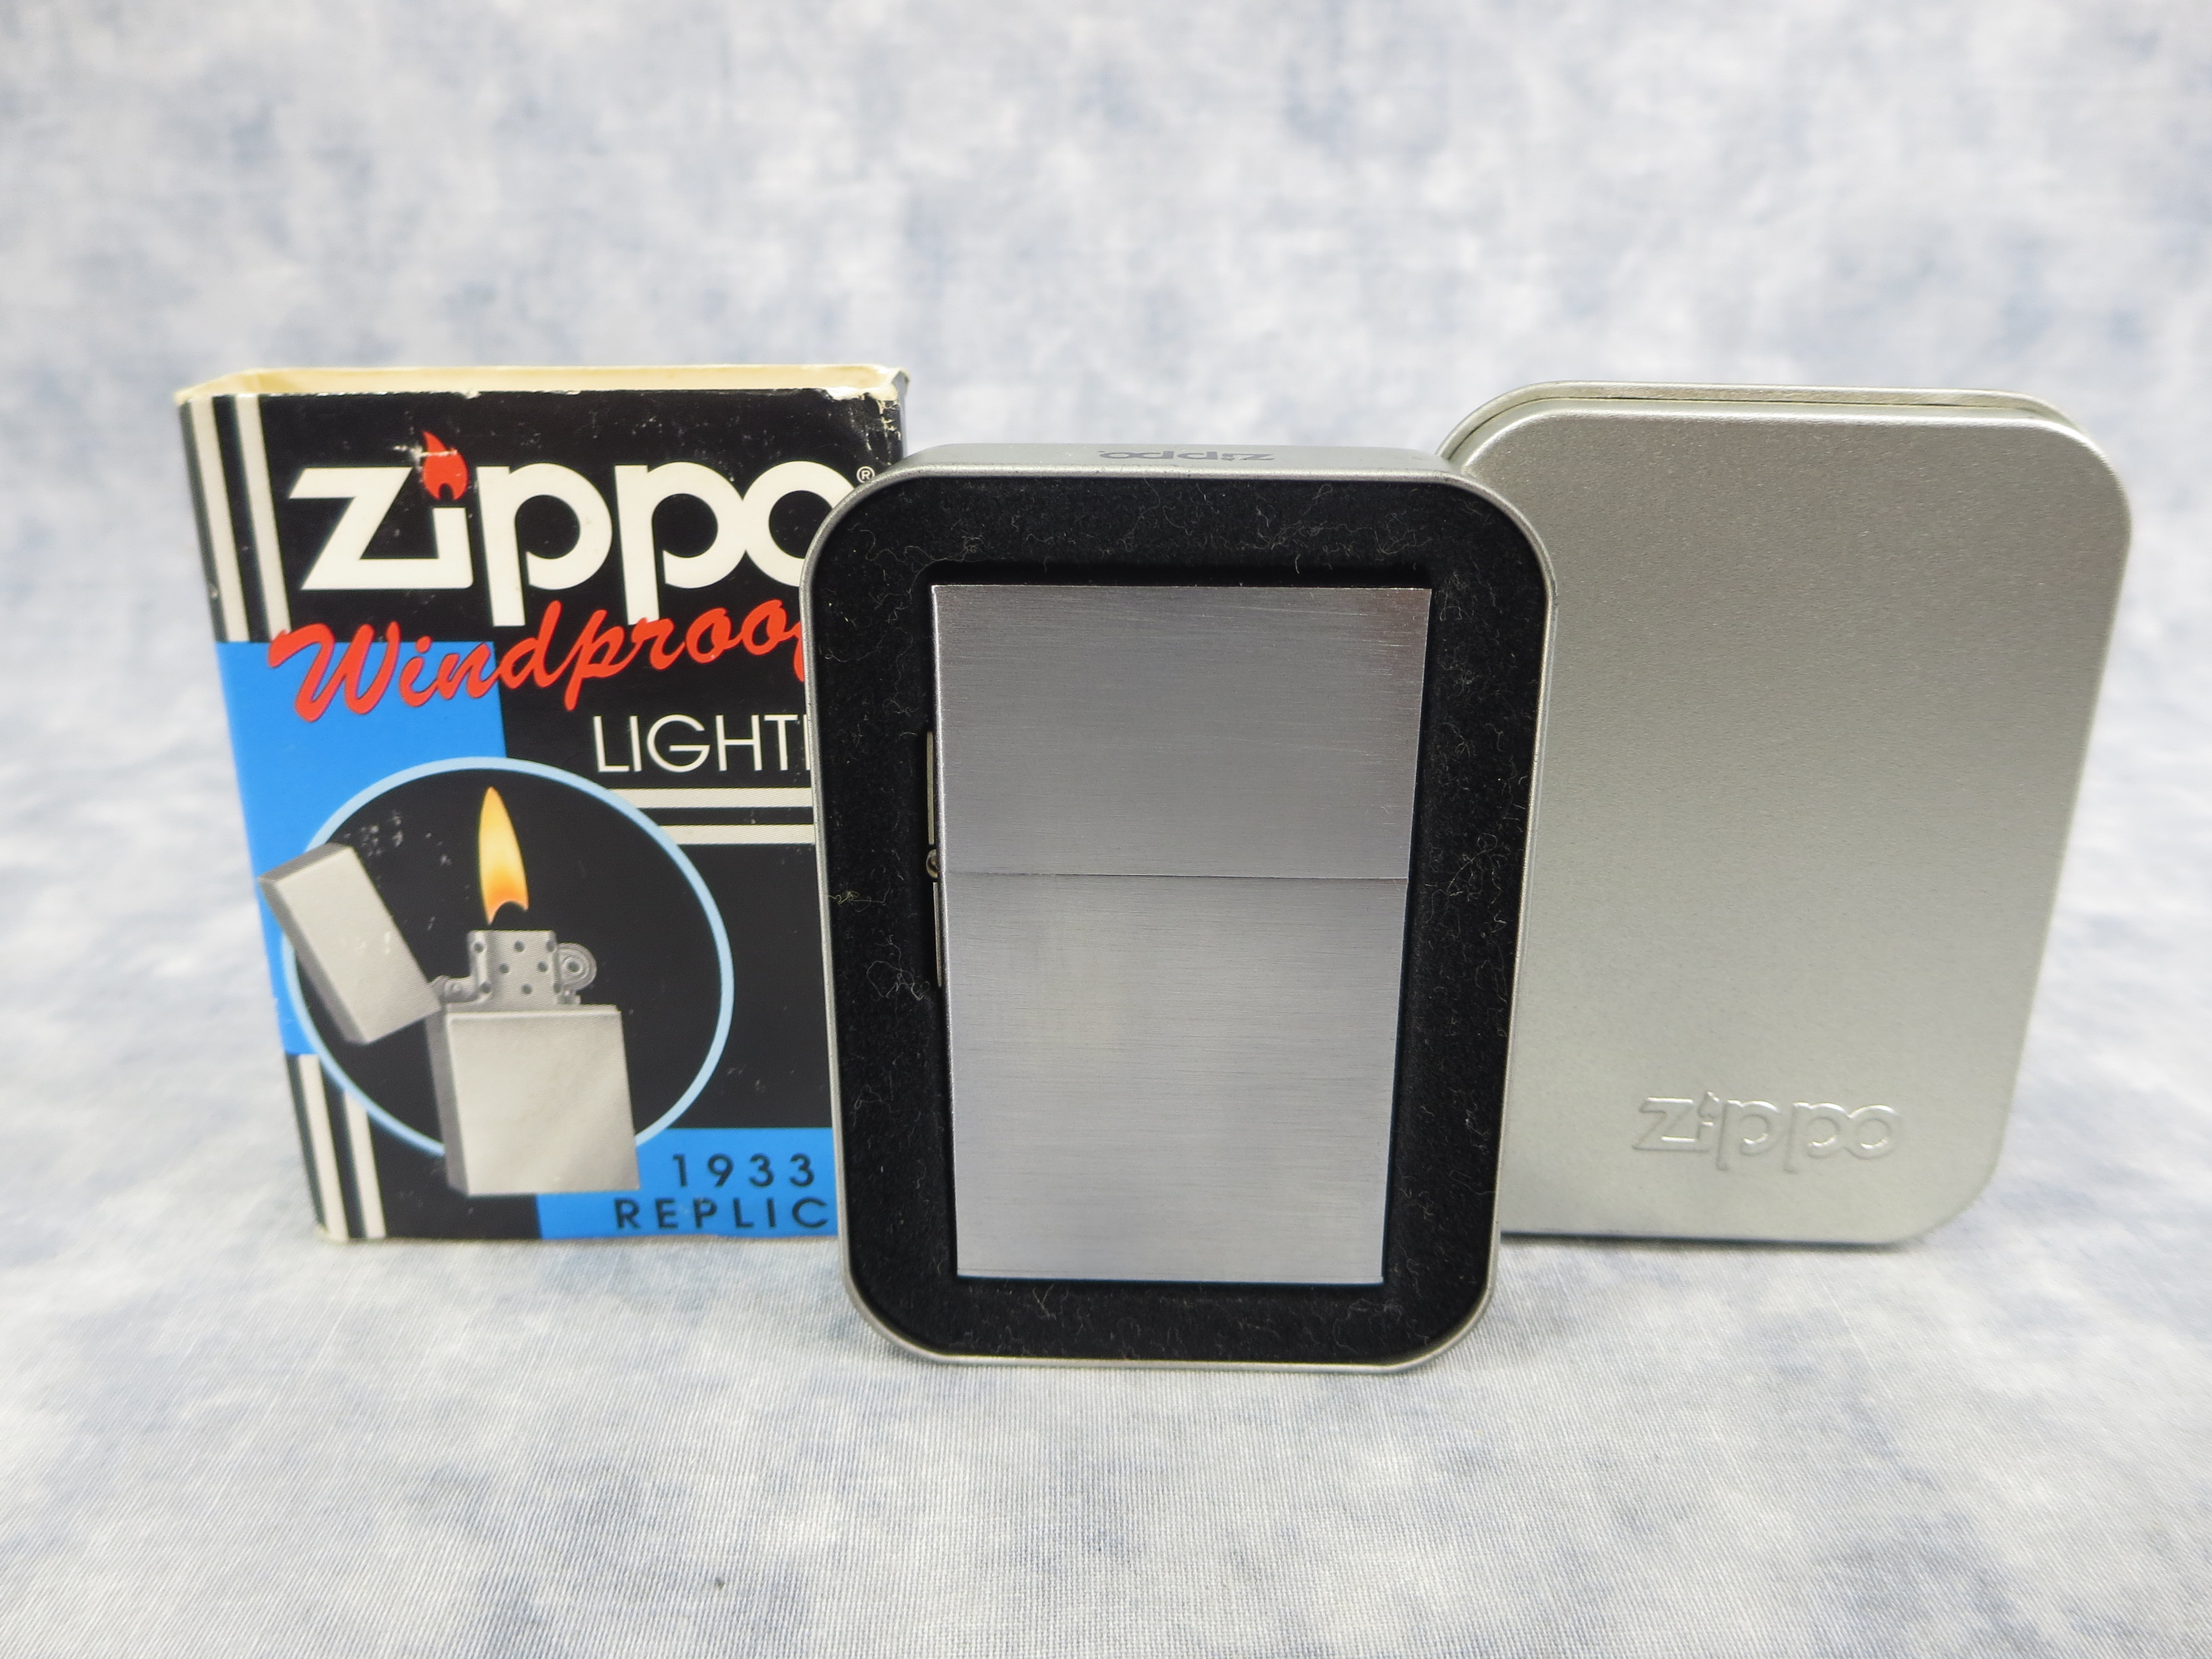 Zippo 1933 Replica lighter First Release